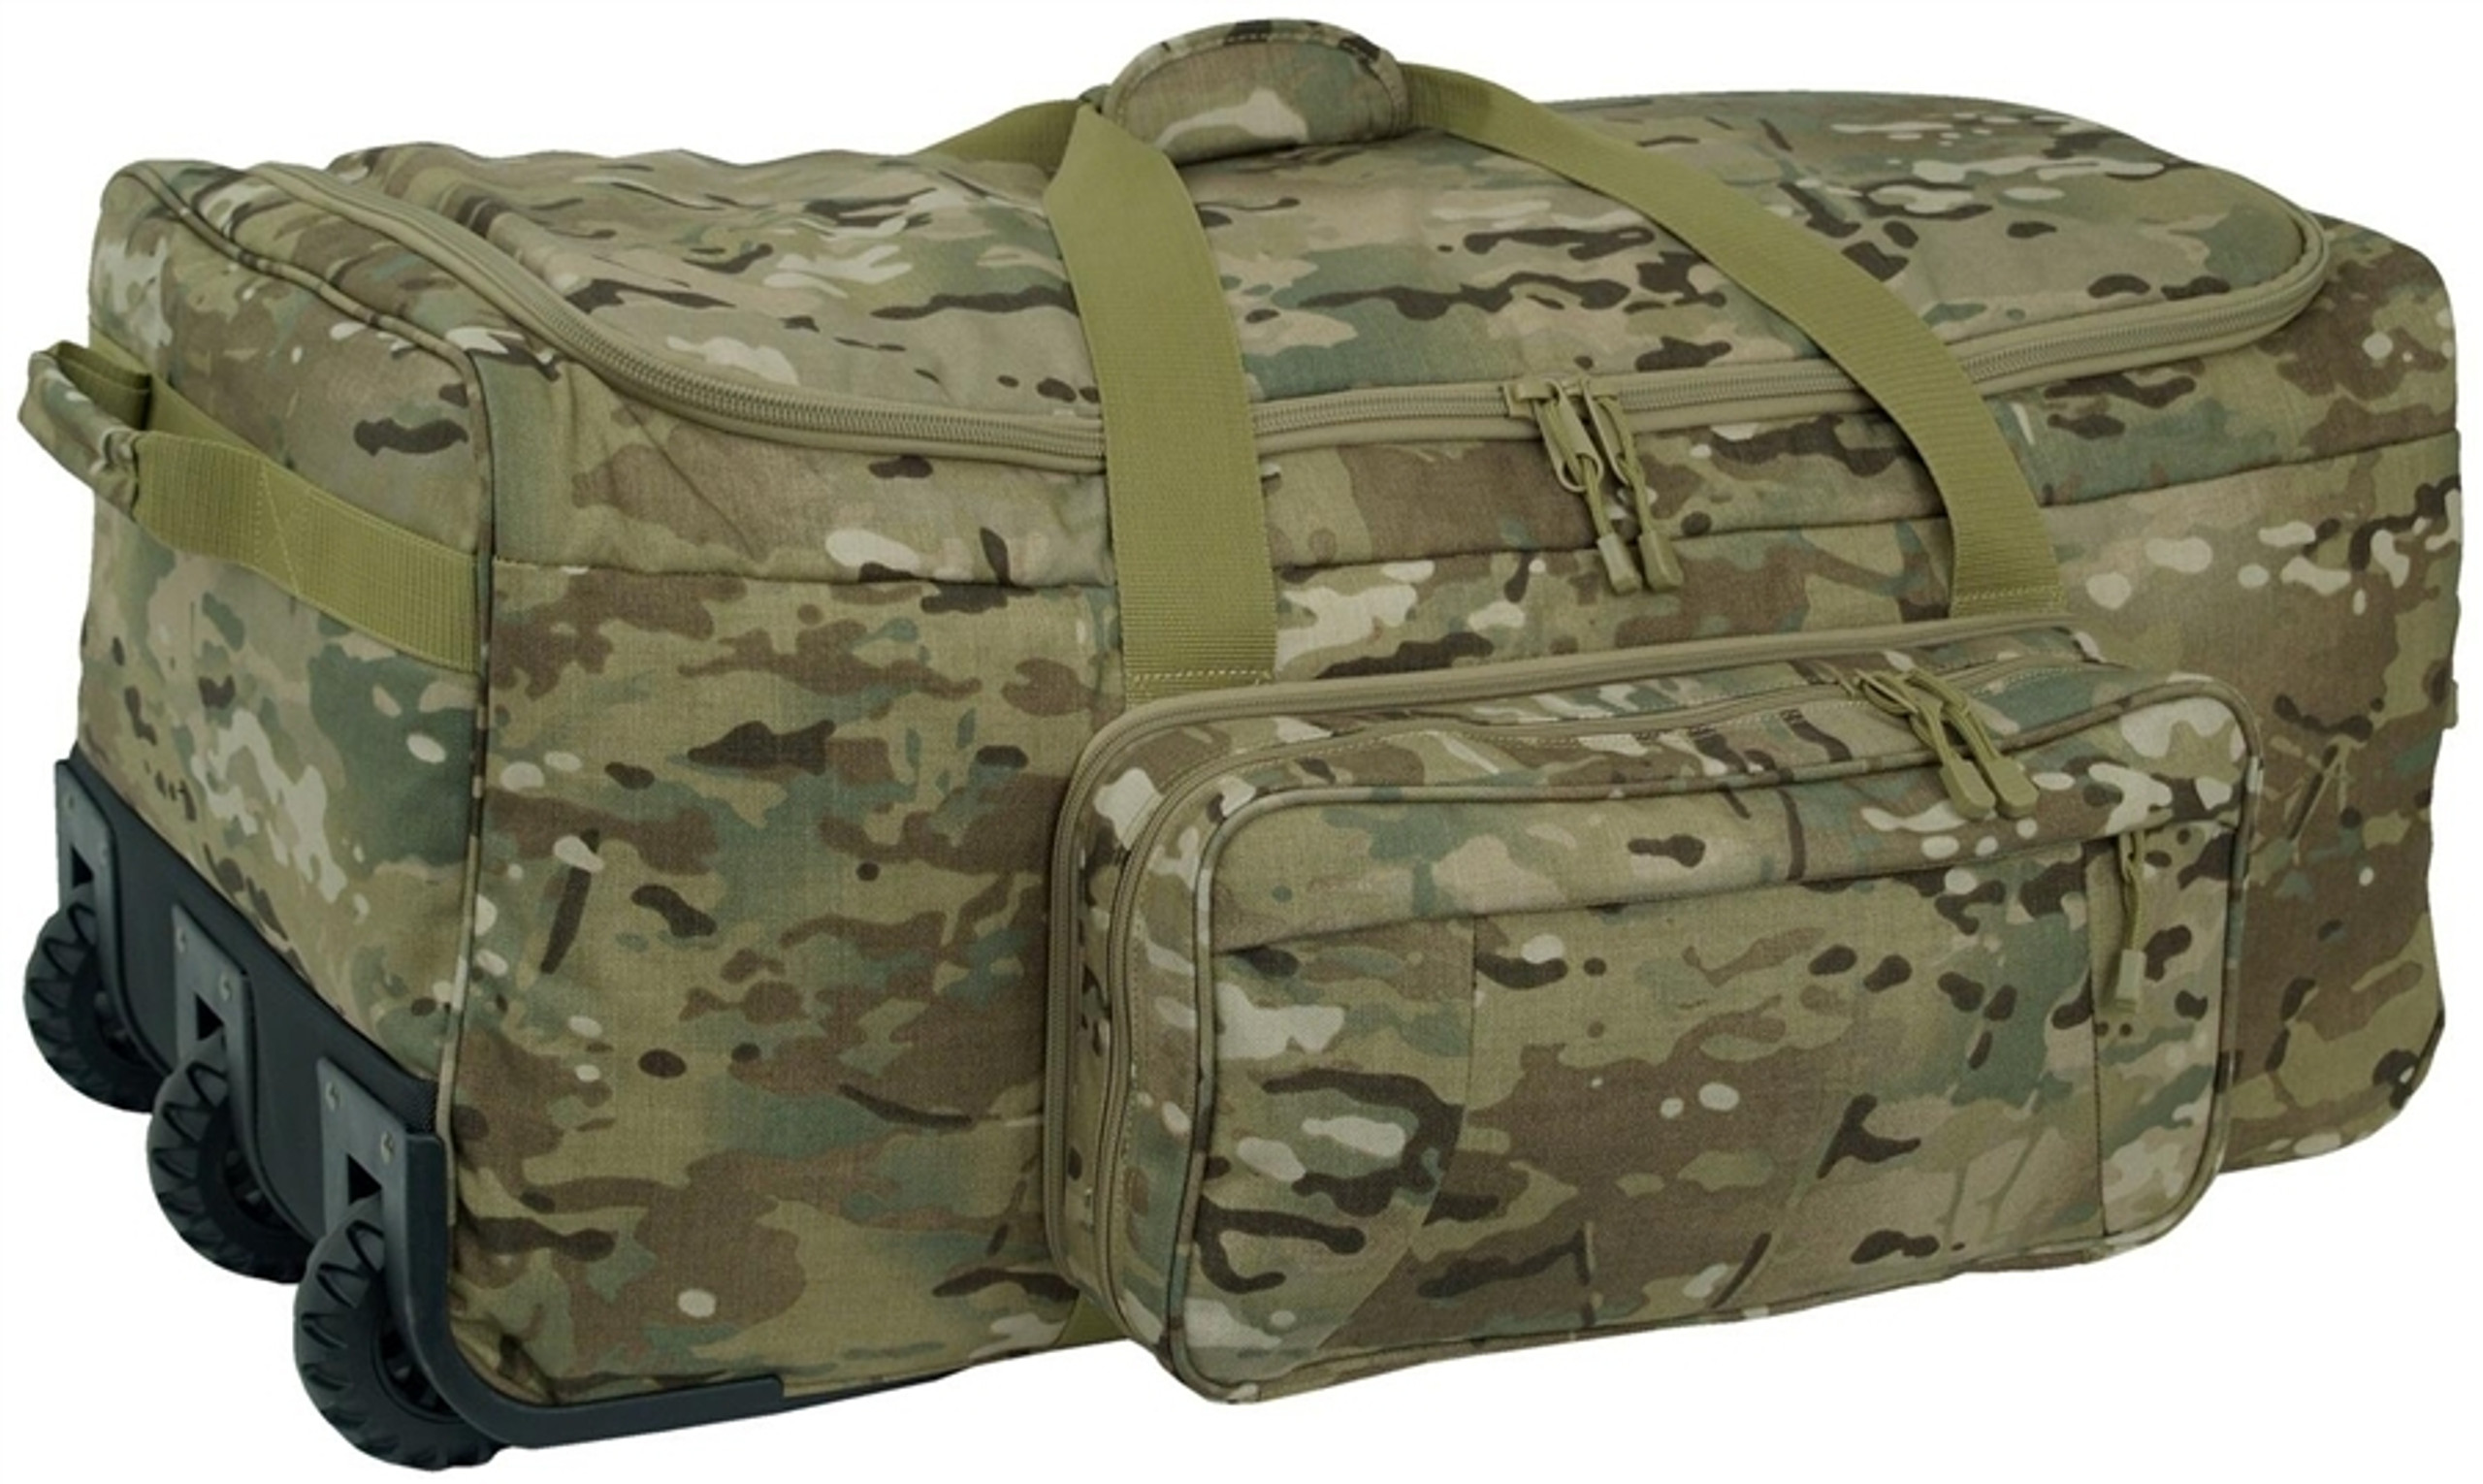 Multicam OCP Bags, Packs & Cases